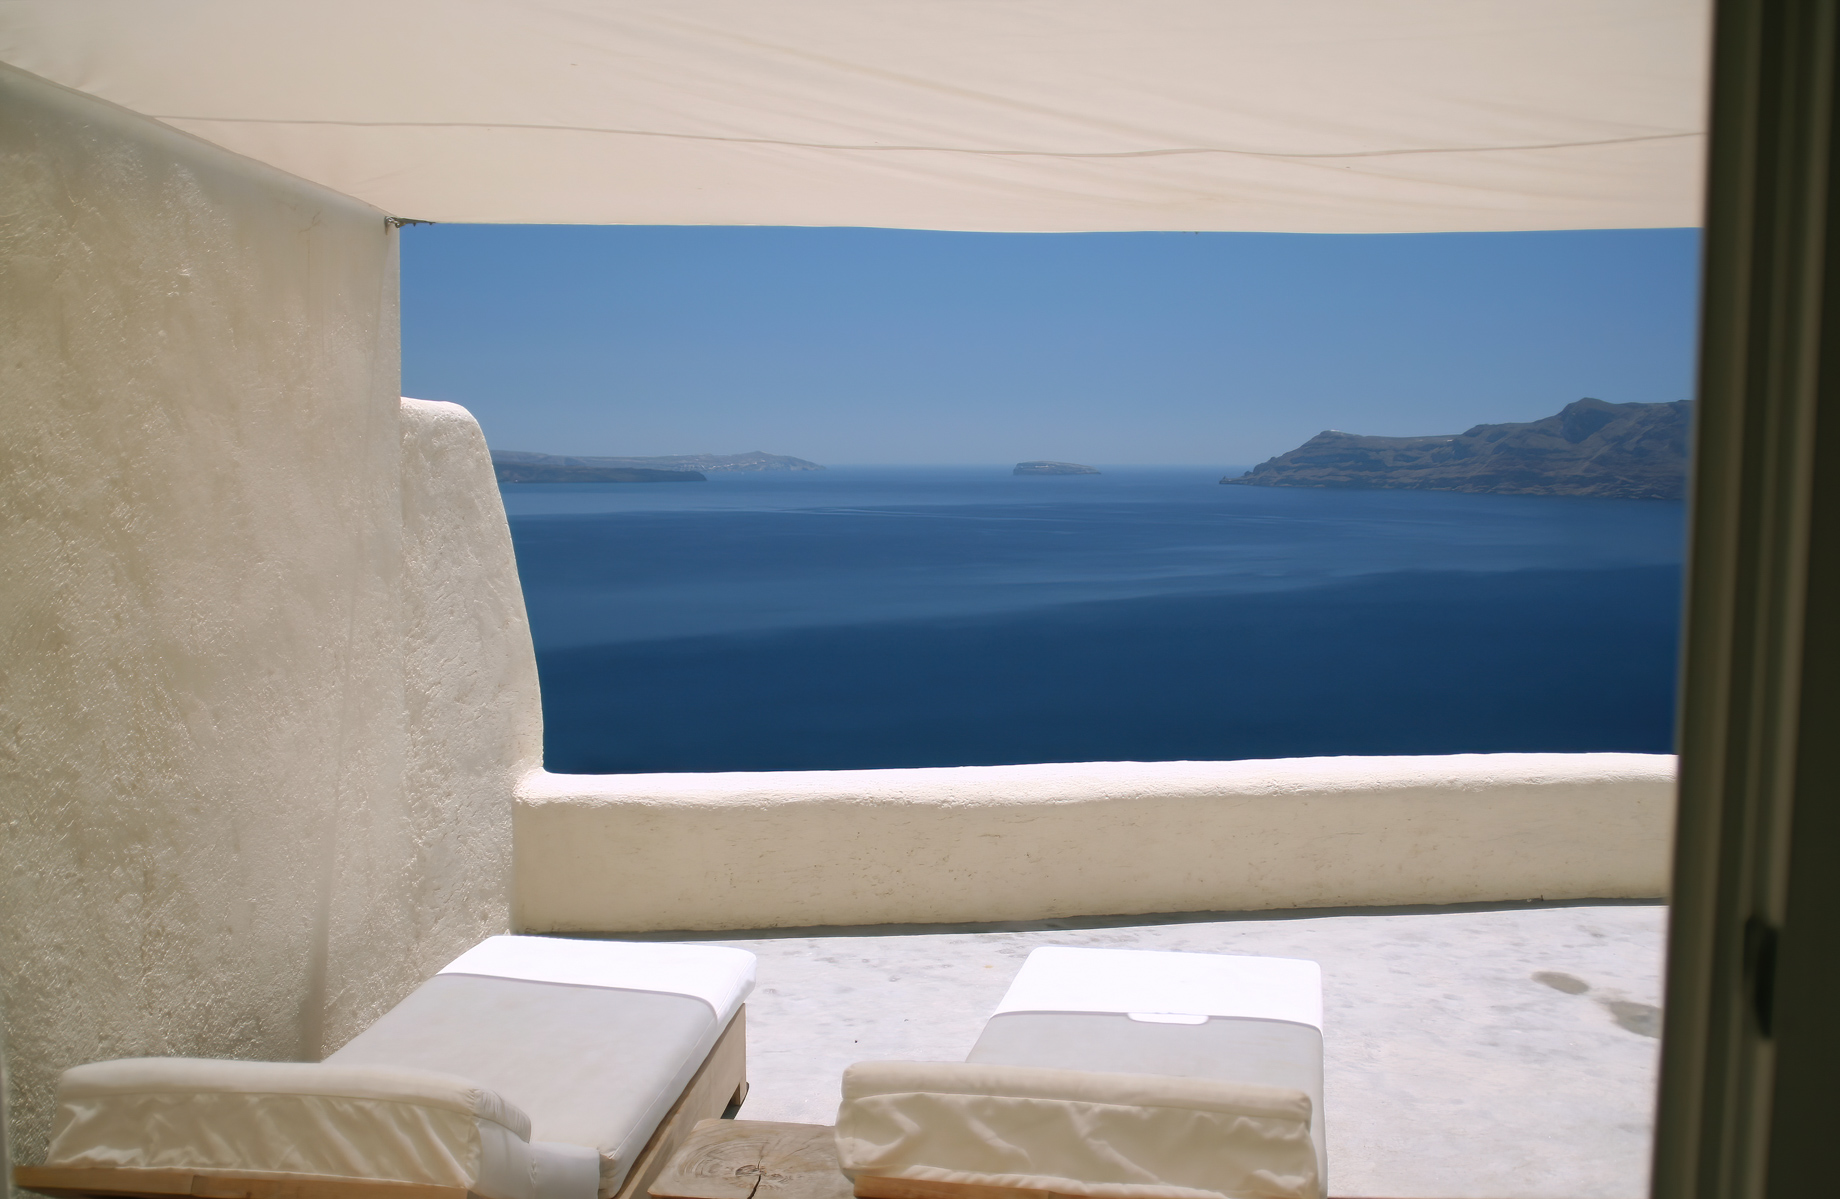 Mystique Hotel Santorini – Oia, Santorini Island, Greece – Ocean View Patio